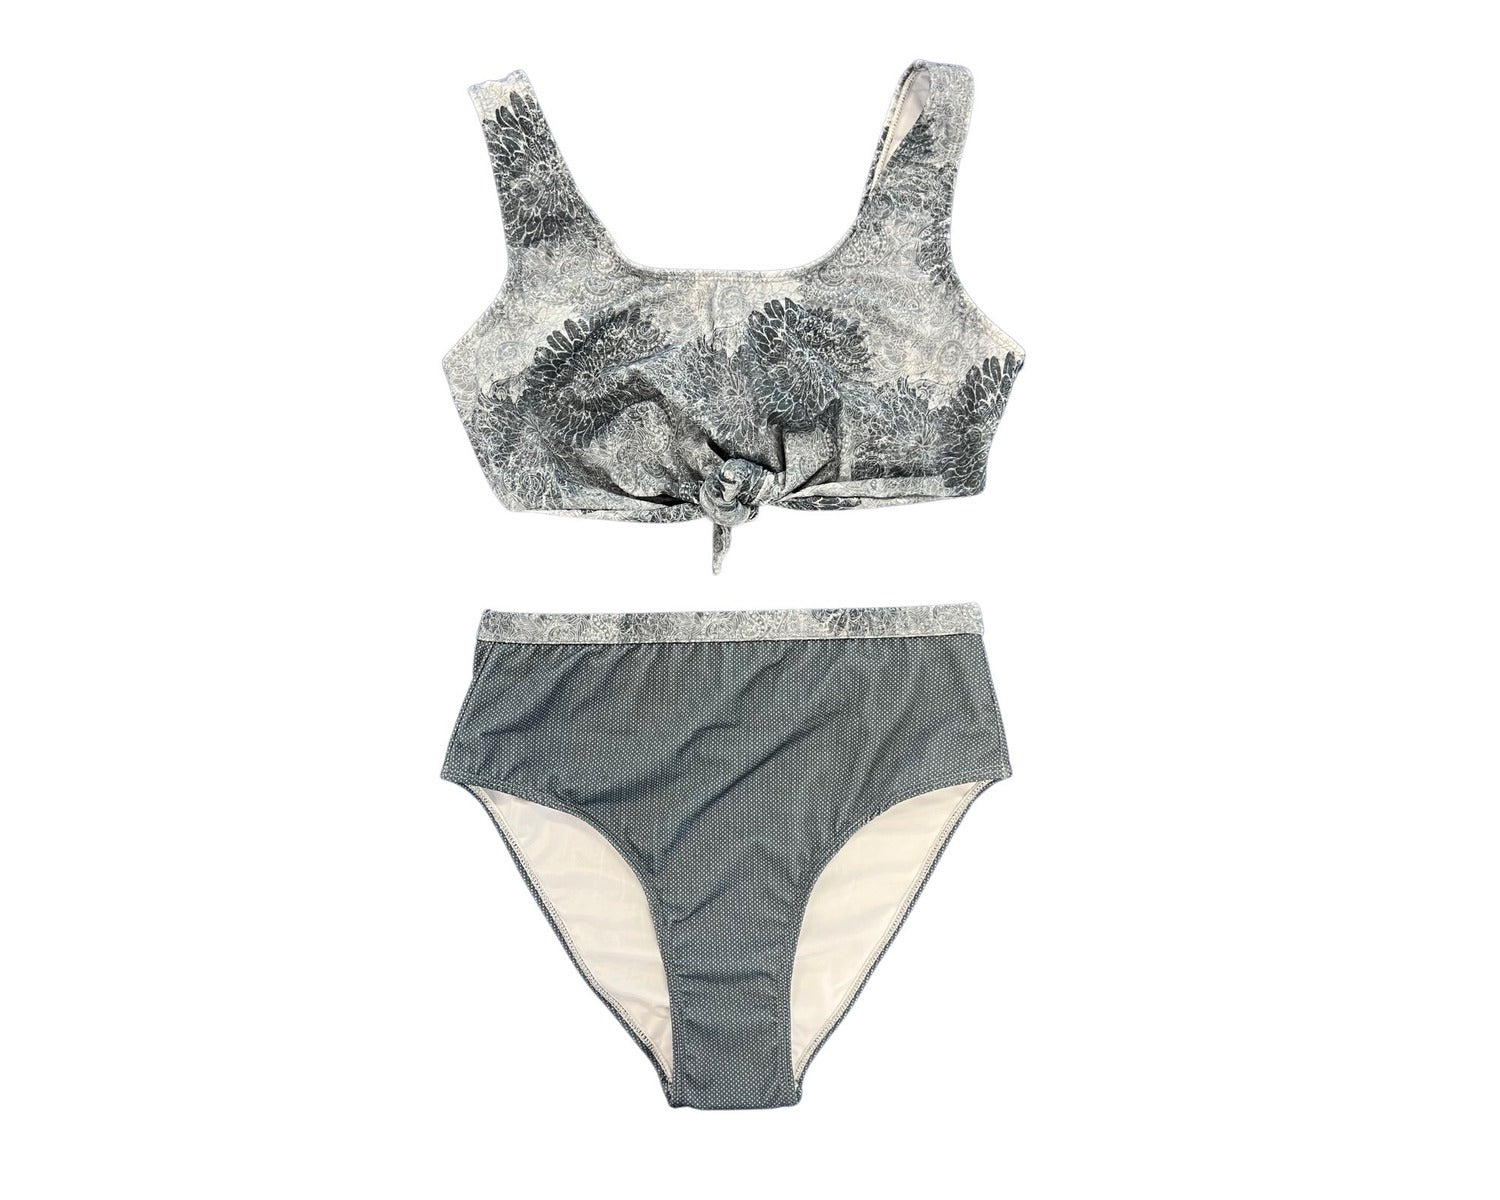 Olga Valentine Swimwear&#39;s Mandala Tie Front Teen Bikini in Grey. The top of the bikini features a grey mandala flower pattern. The bikini bottom features a similar design around the waist and is also grey.